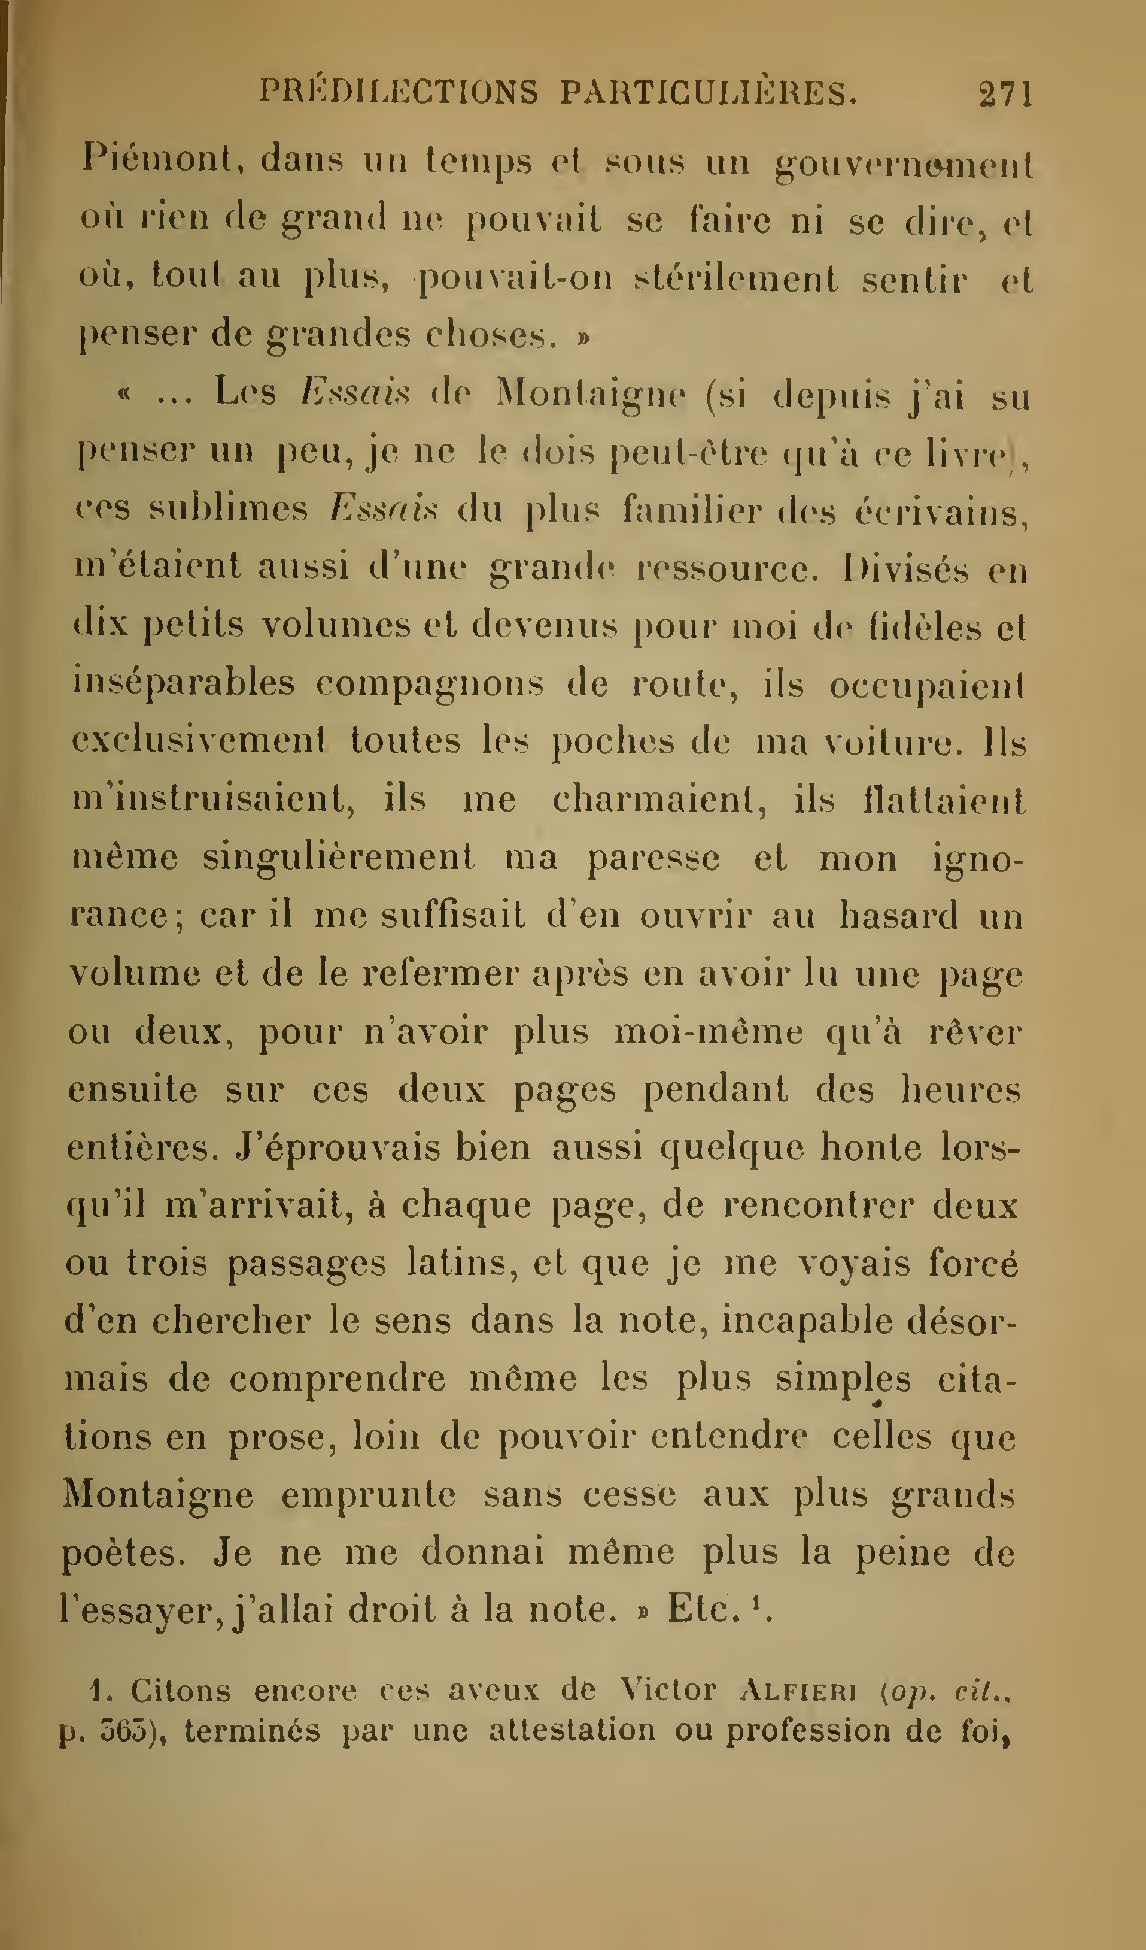 Albert Cim, Le Livre, t. I, p. 271.